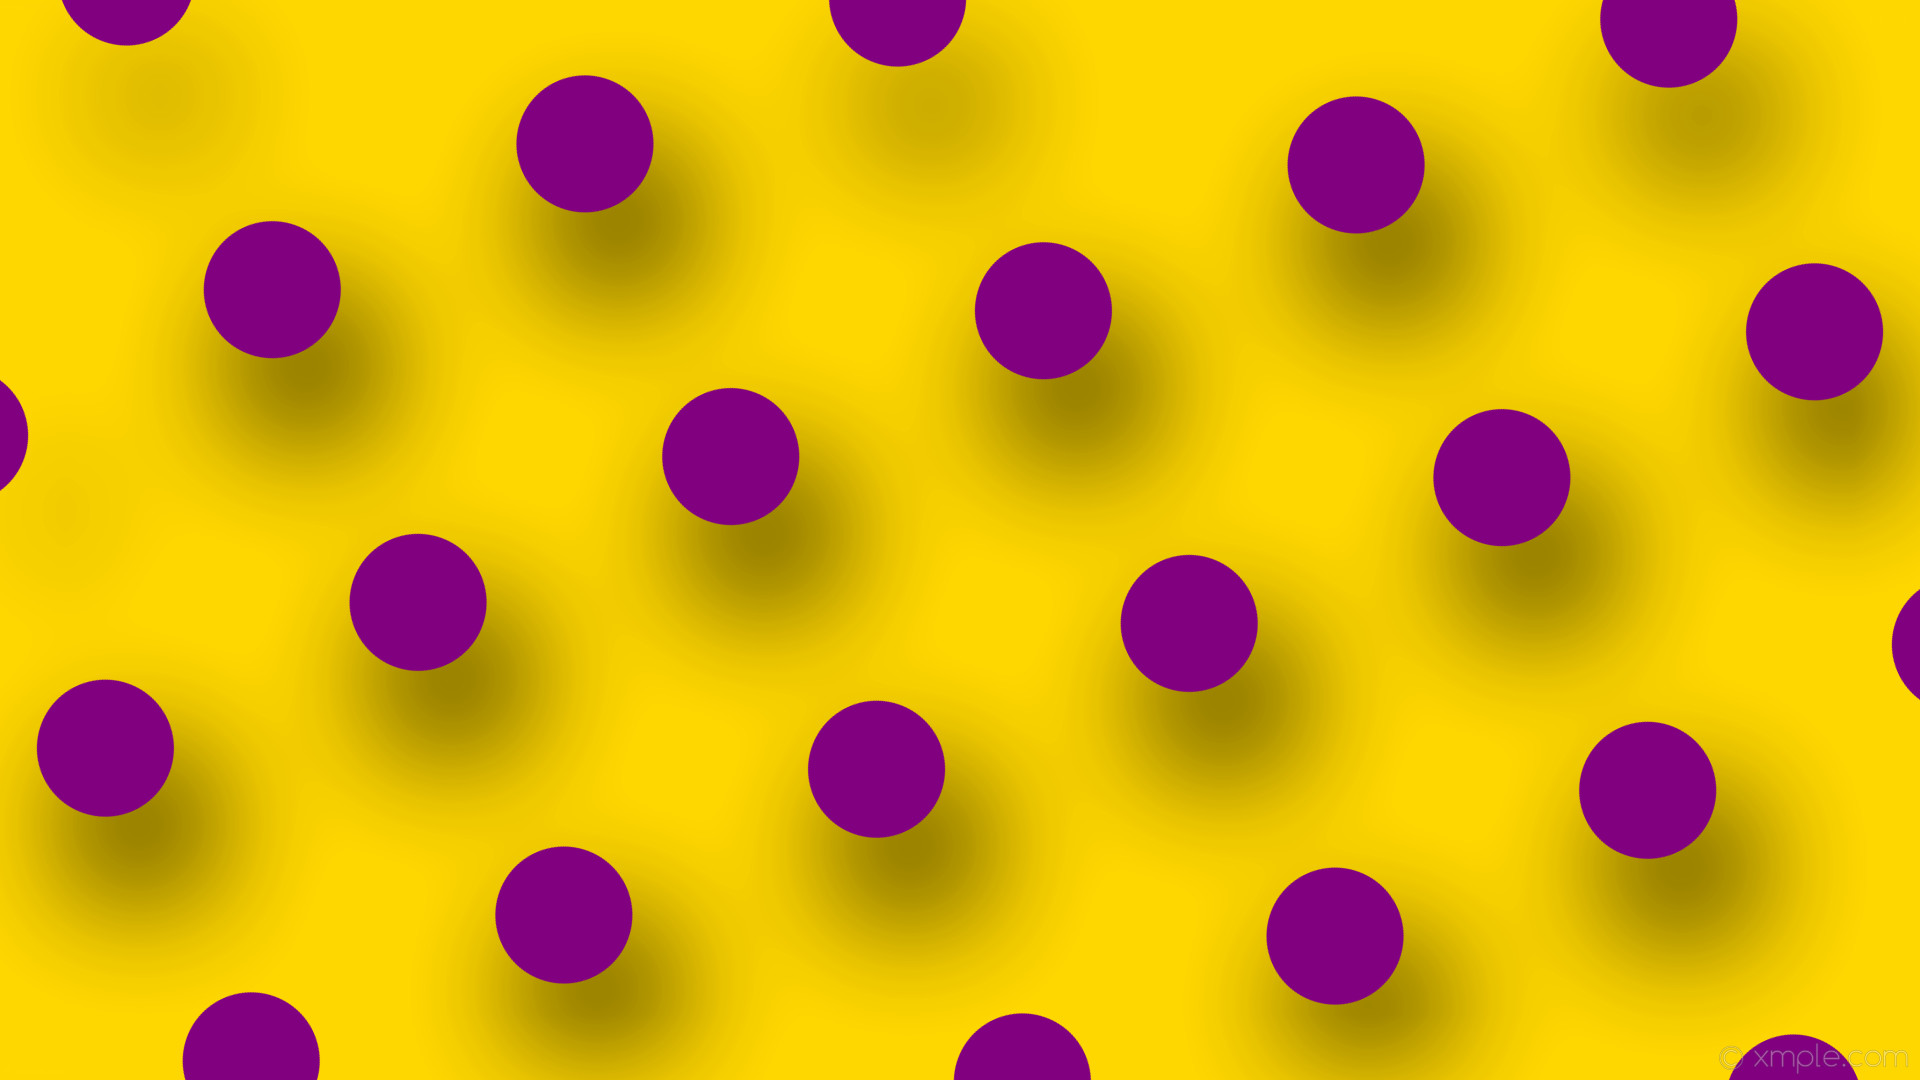 1920x1080 wallpaper polka drop shadow dots purple yellow gold #ffd700 #800080 25Â° 20Â°